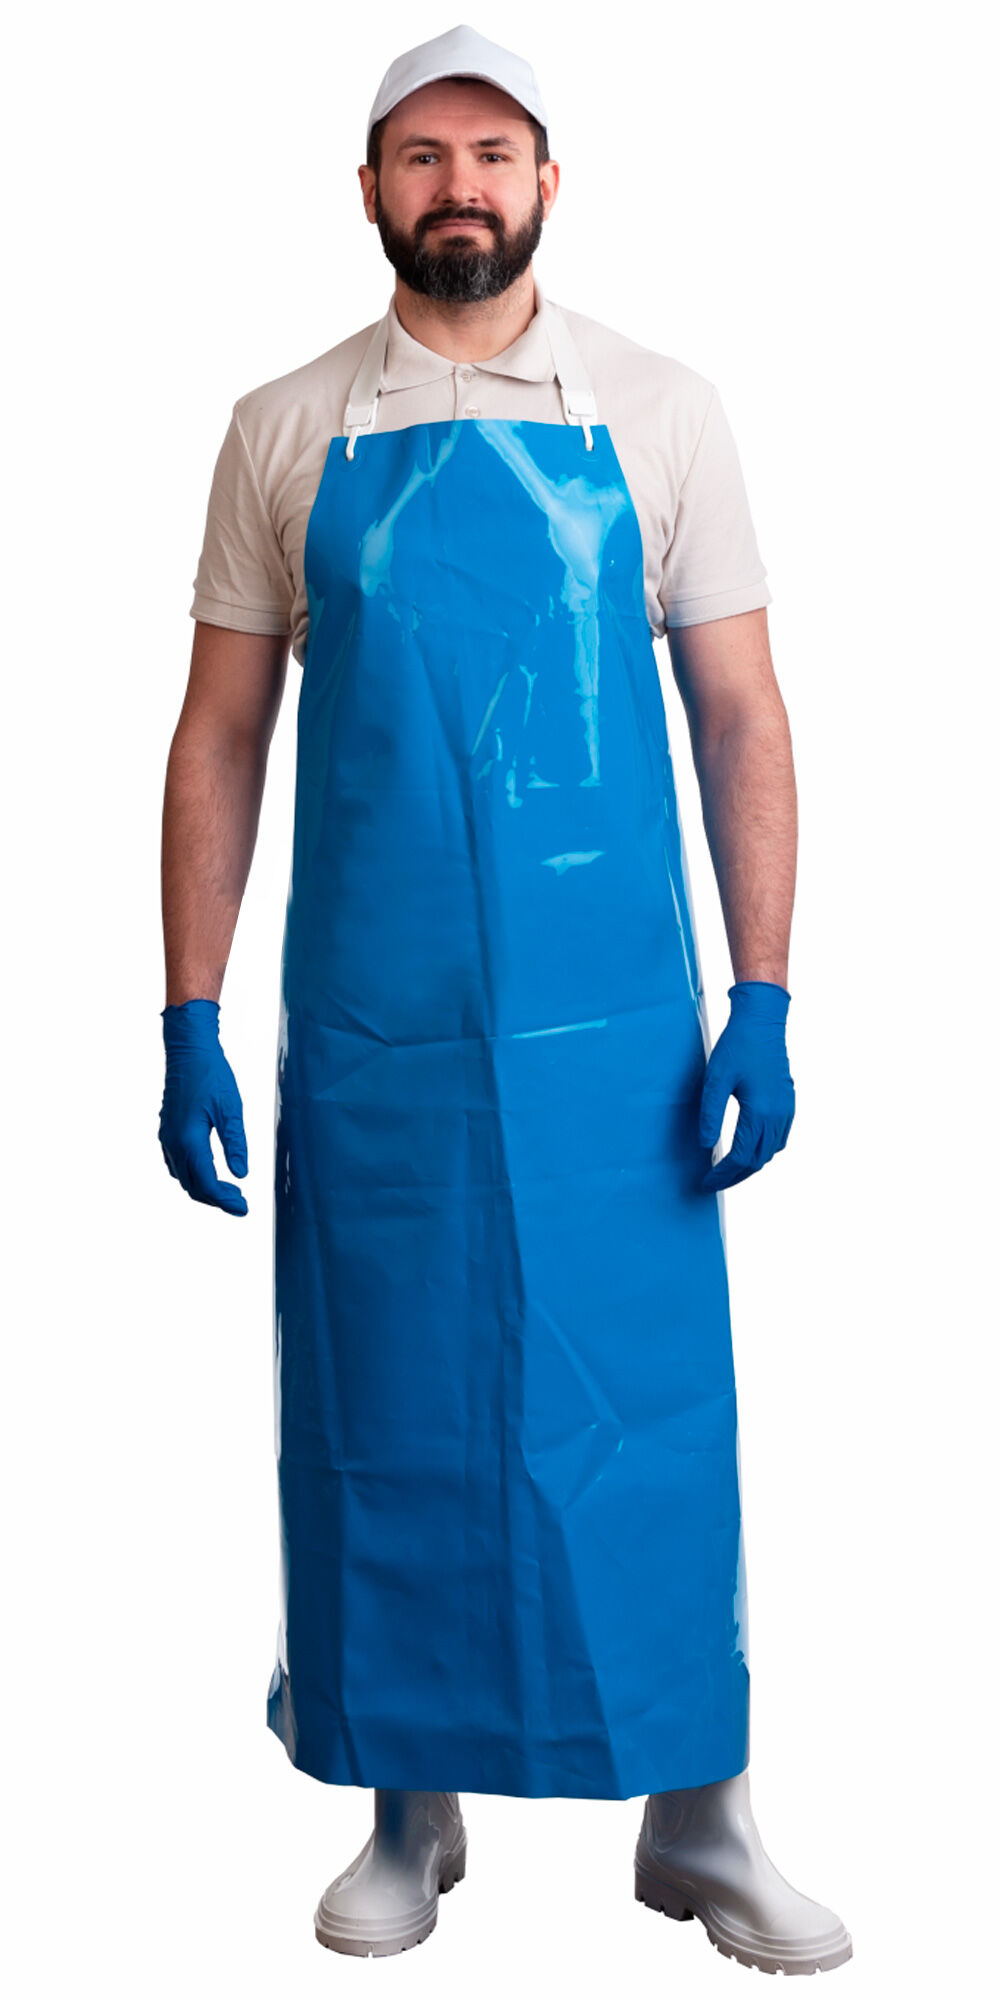 Фартук полиуретановый ЛАРИПОЛ облегченный синий толщина 0,15 мм, р. 90 см х 115 см (ФАР014) (х24)